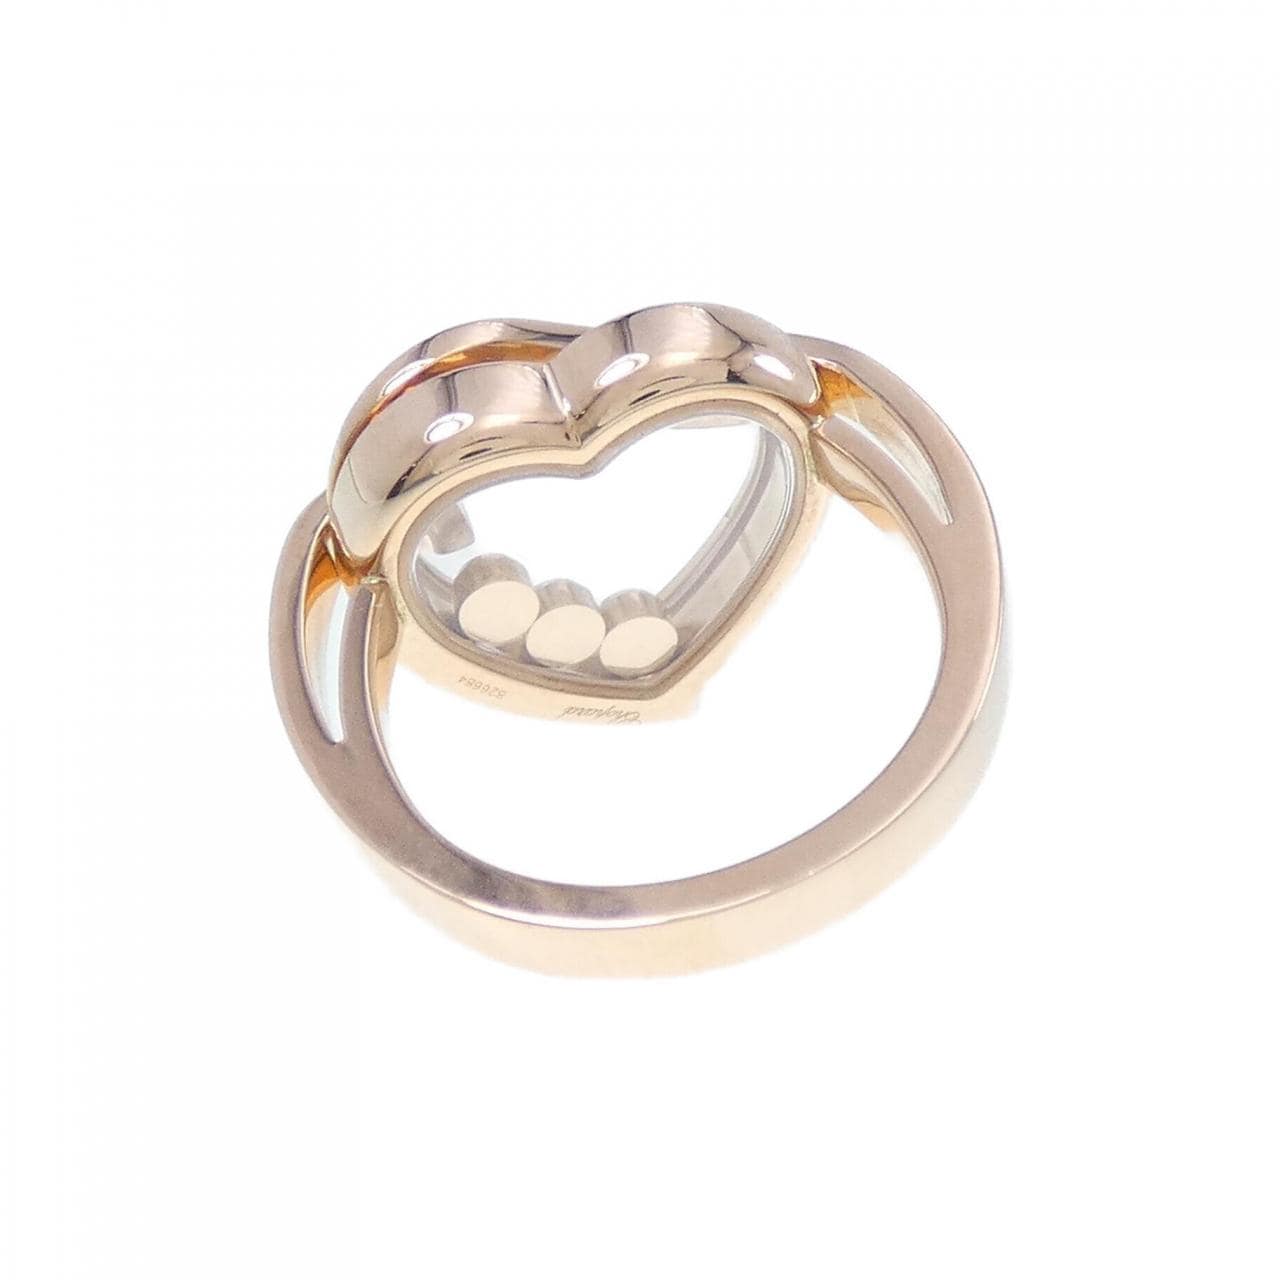 CHOPARD heart Diamond ring